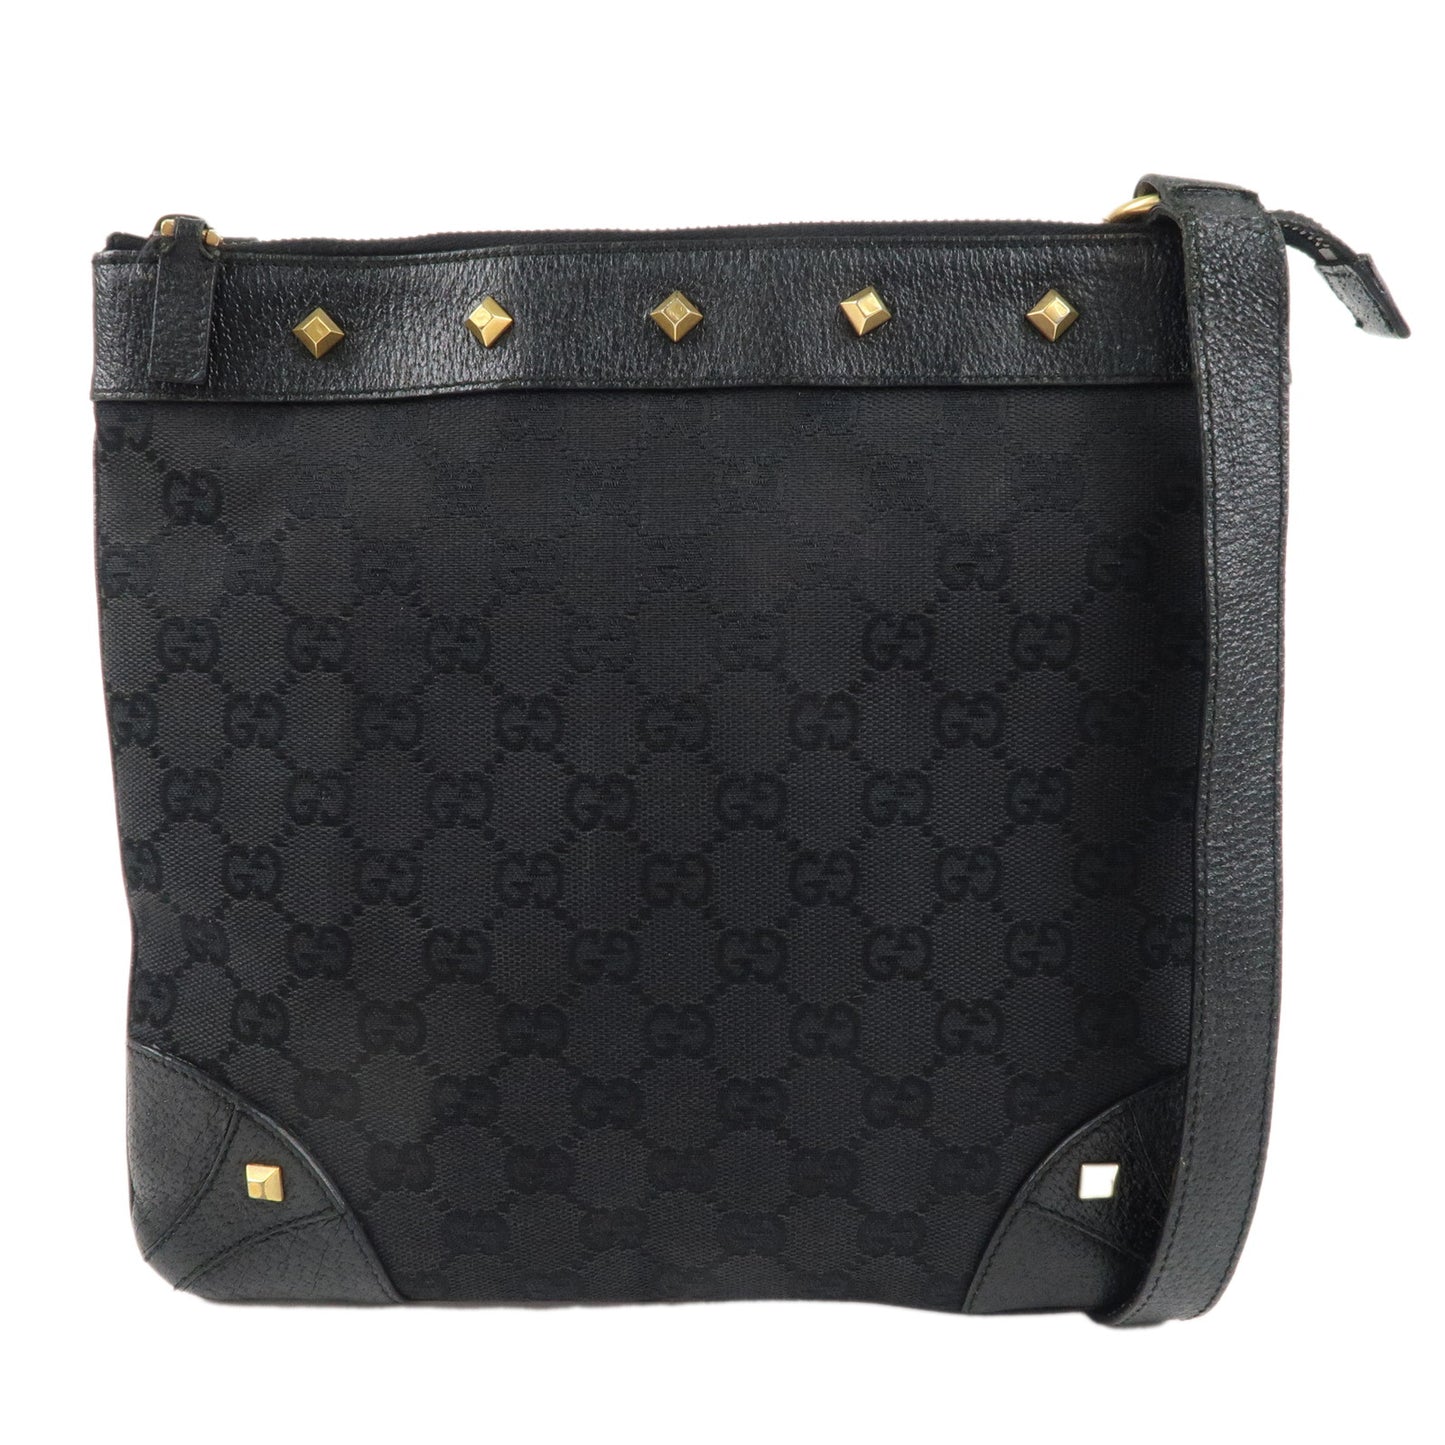 GUCCI-GG-Canvas-Leather-Shoulder-Bag-Crossbody-Bag-Black-120893